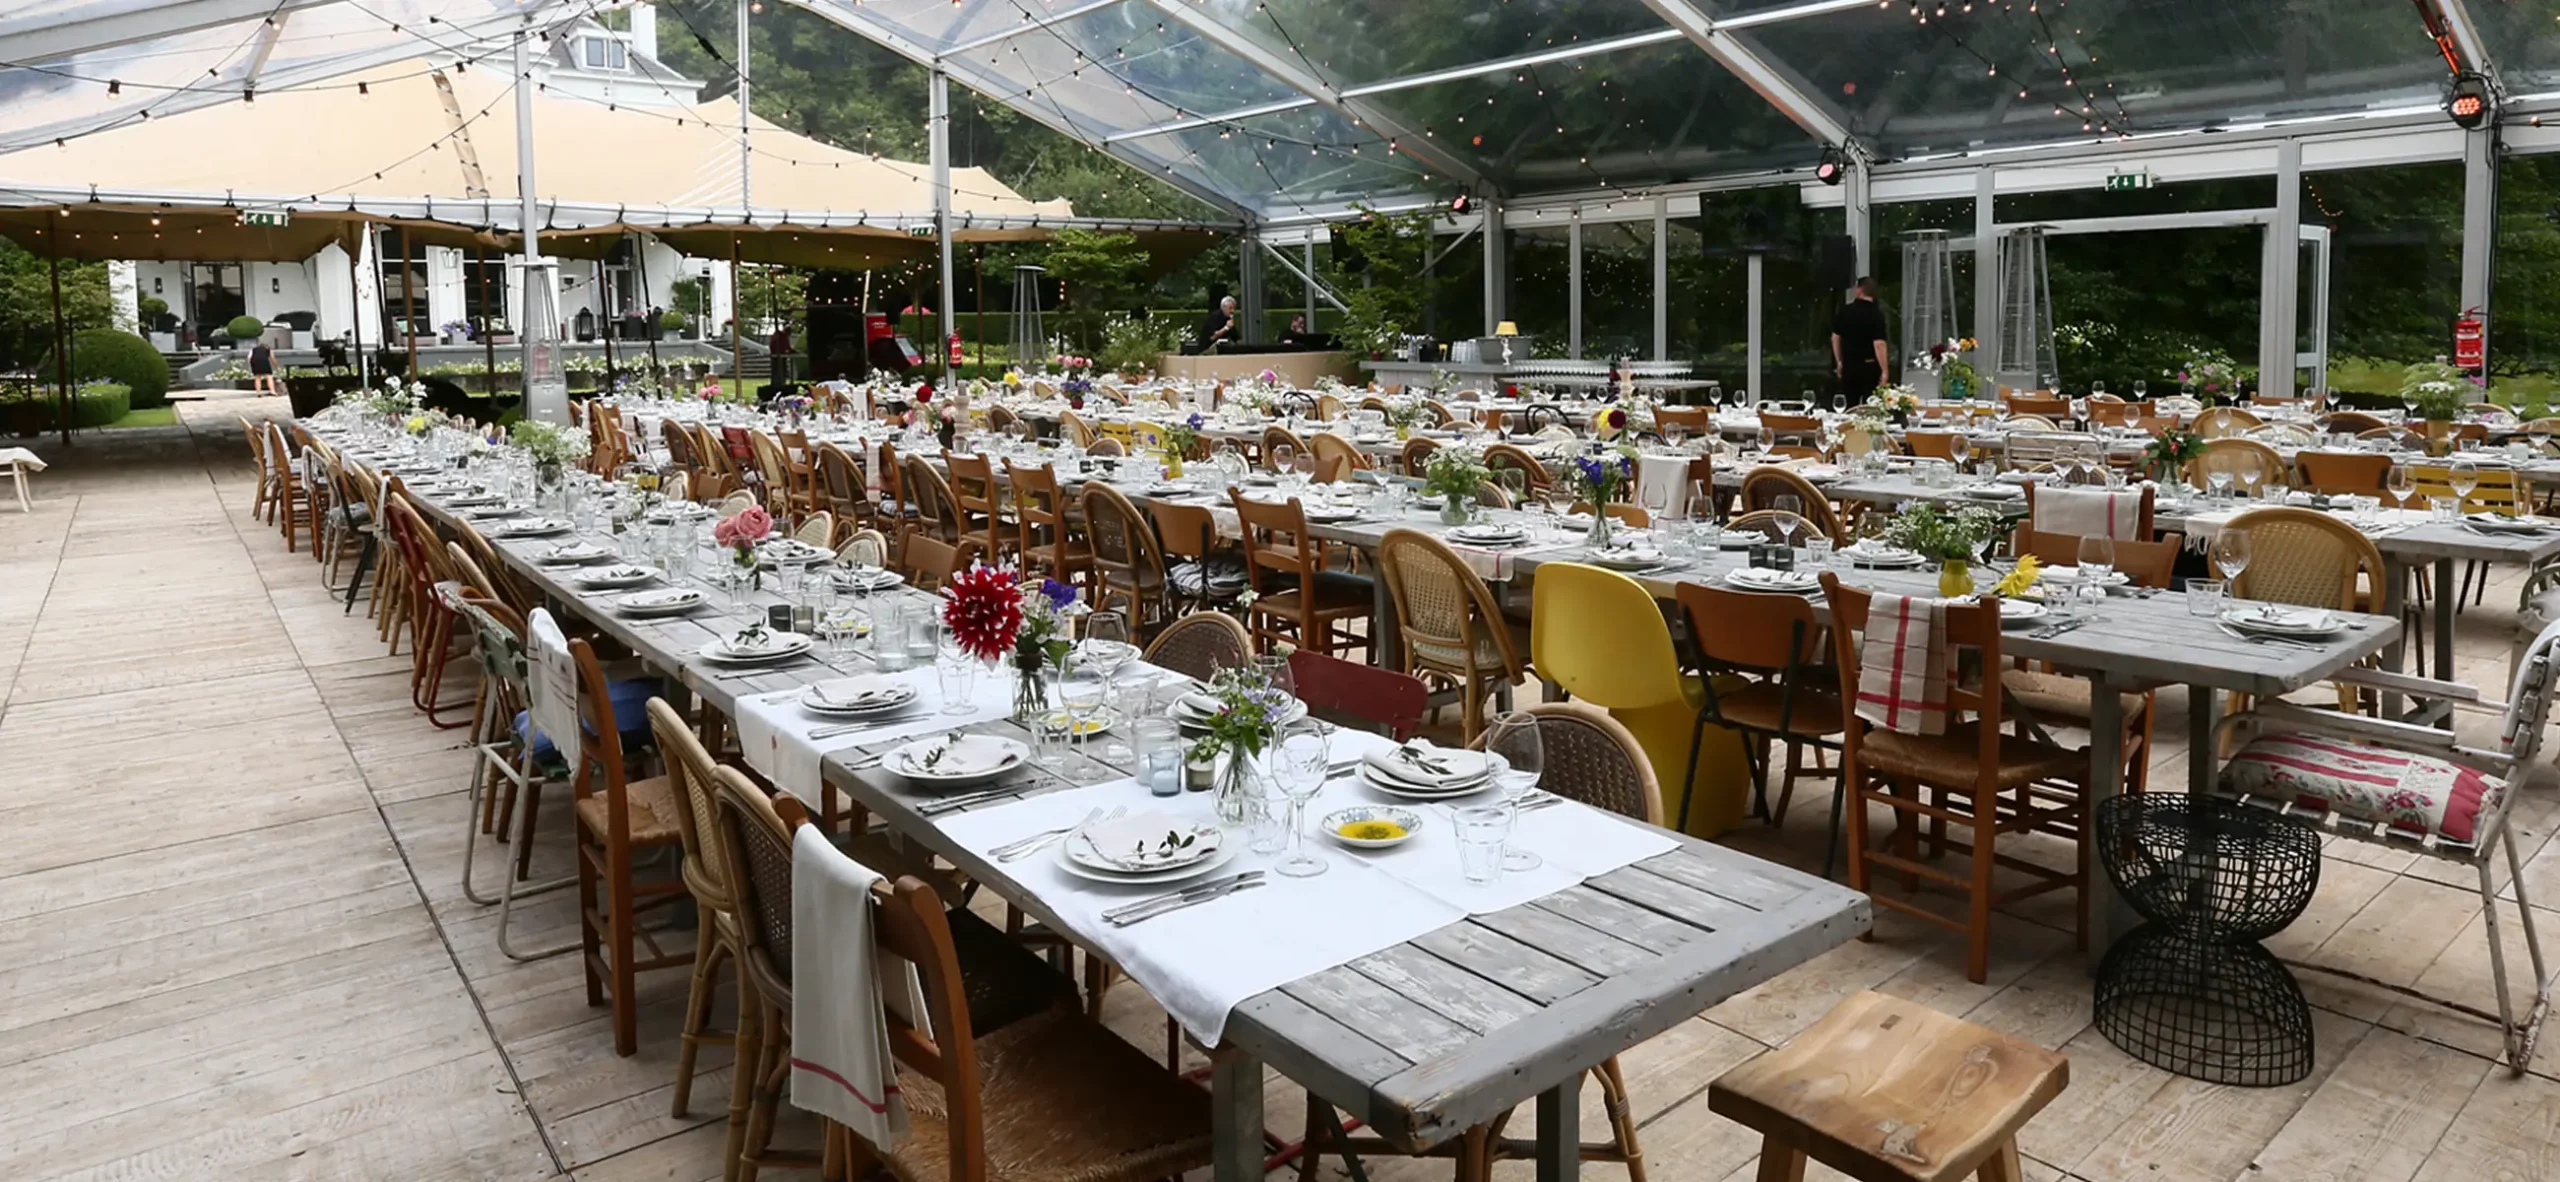 Alu Pavillon transparent für Dinner Party im eigenen Gartenzelt voller Intersettle für private Feiern und Feste